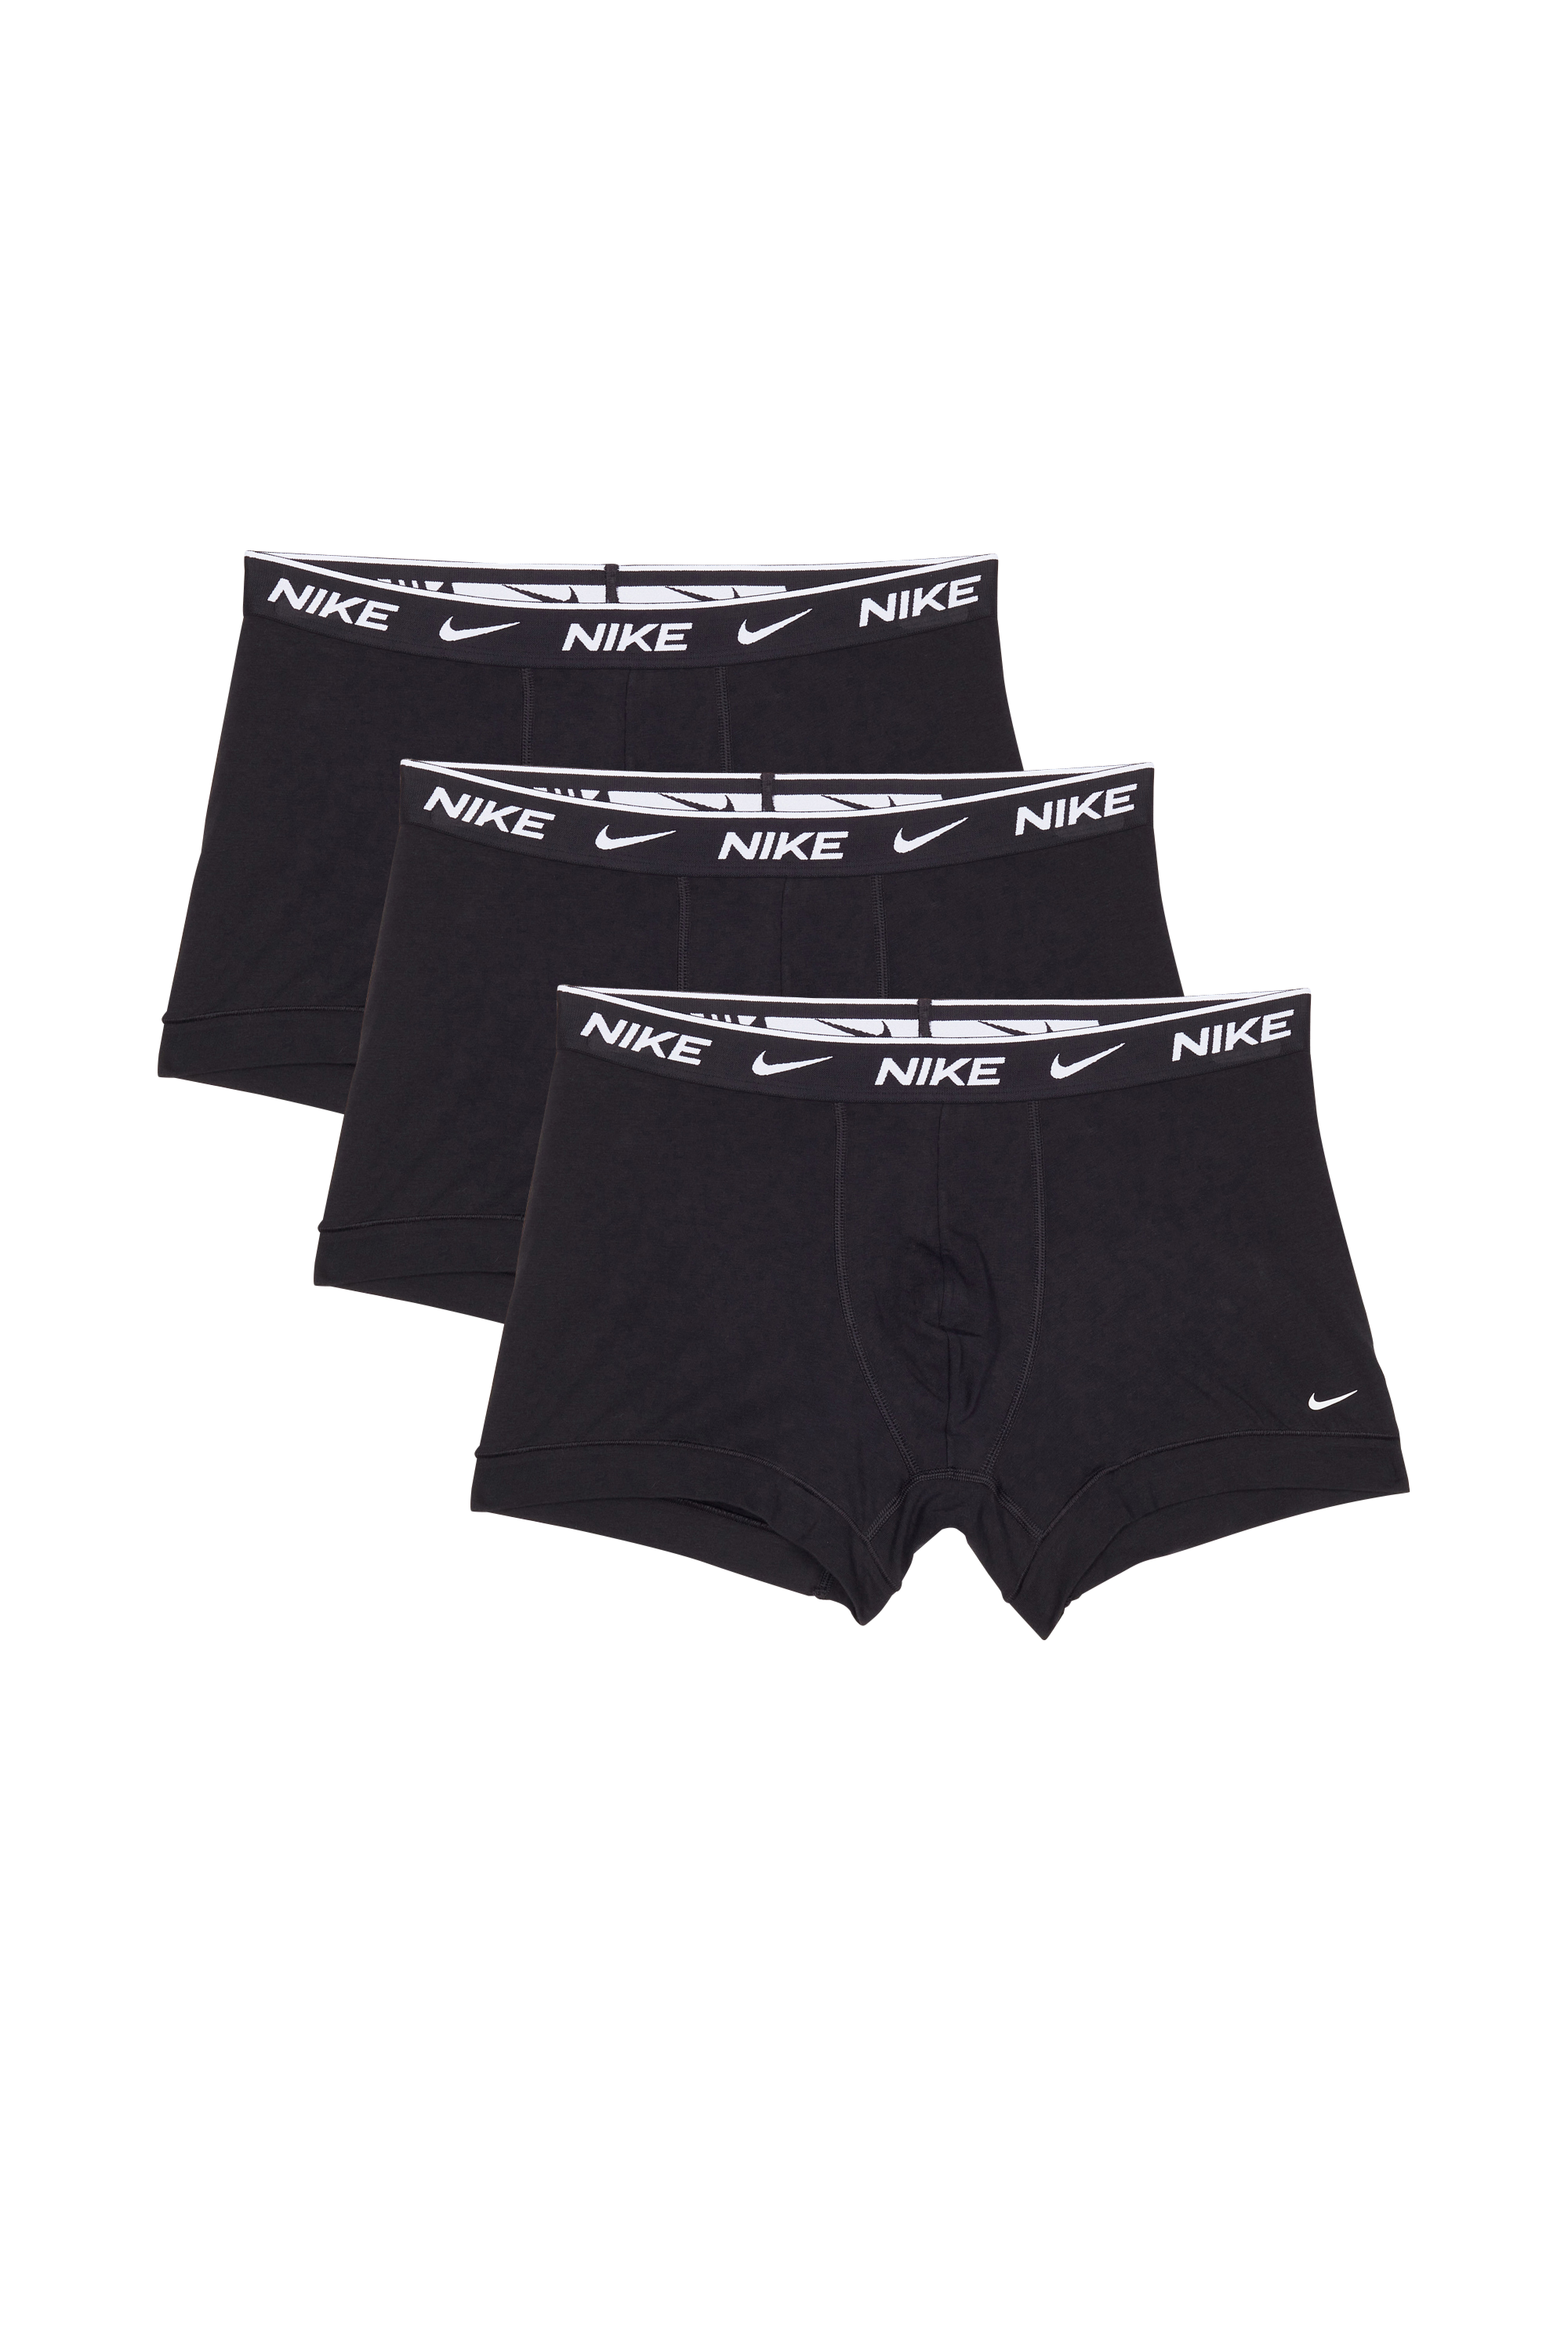 Nike Underwear - Lot de 3 boxers - Taille M